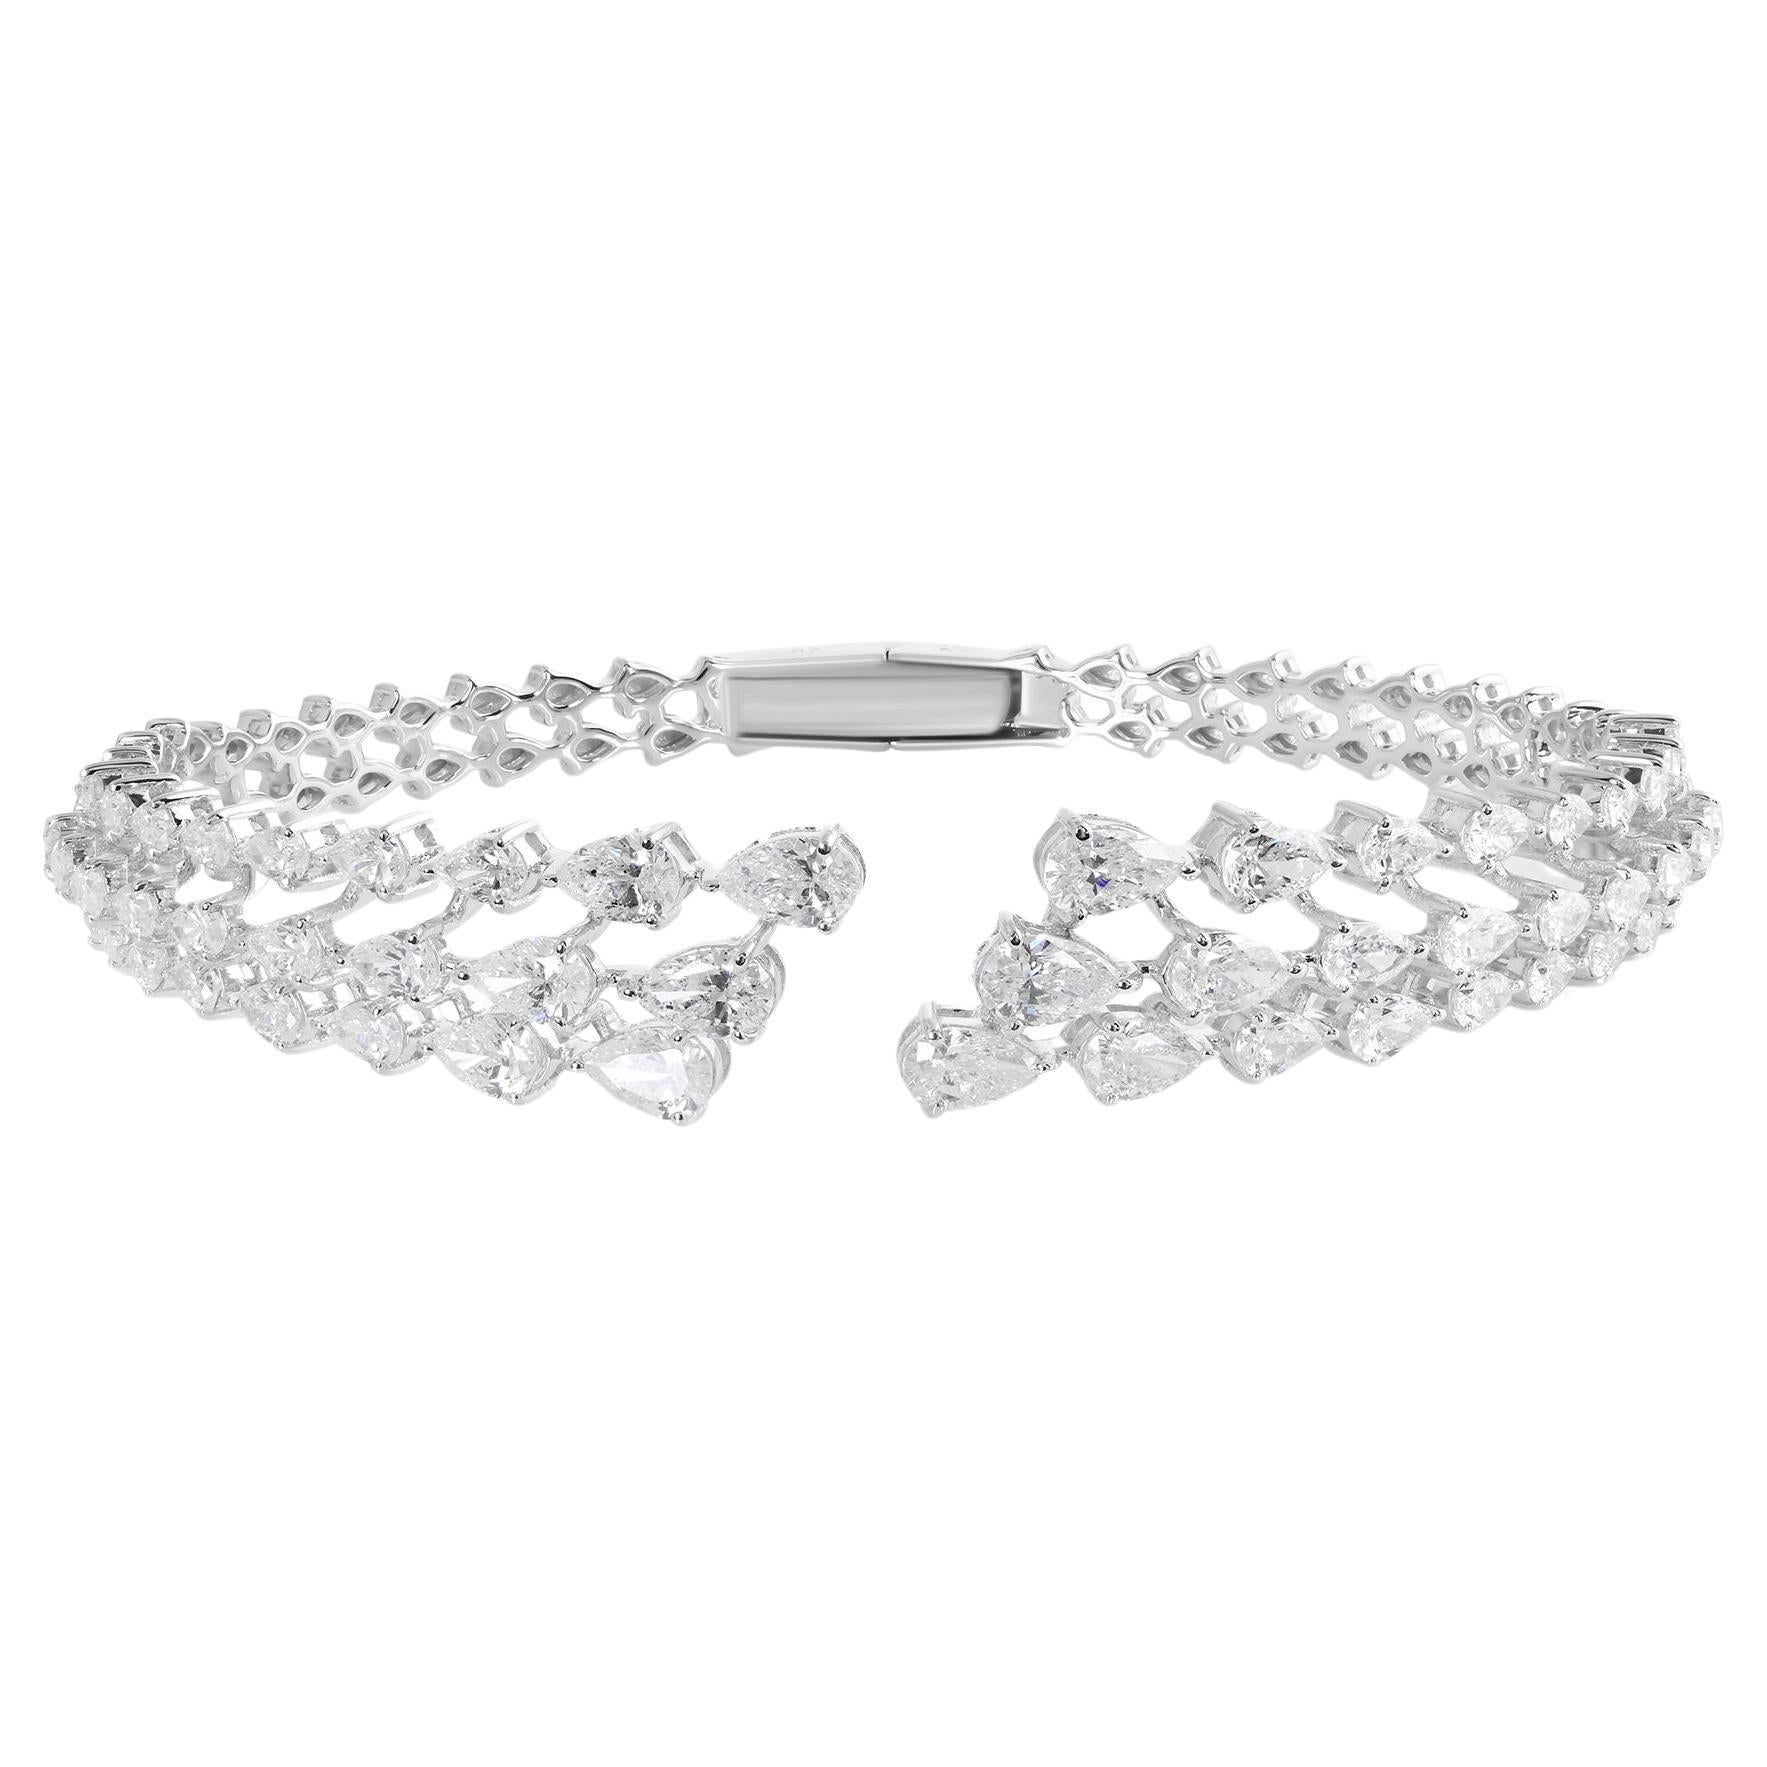 Natural 4.55 Carat Pear Diamond Cuff Bangle Bracelet 18 Karat White Gold Jewelry For Sale